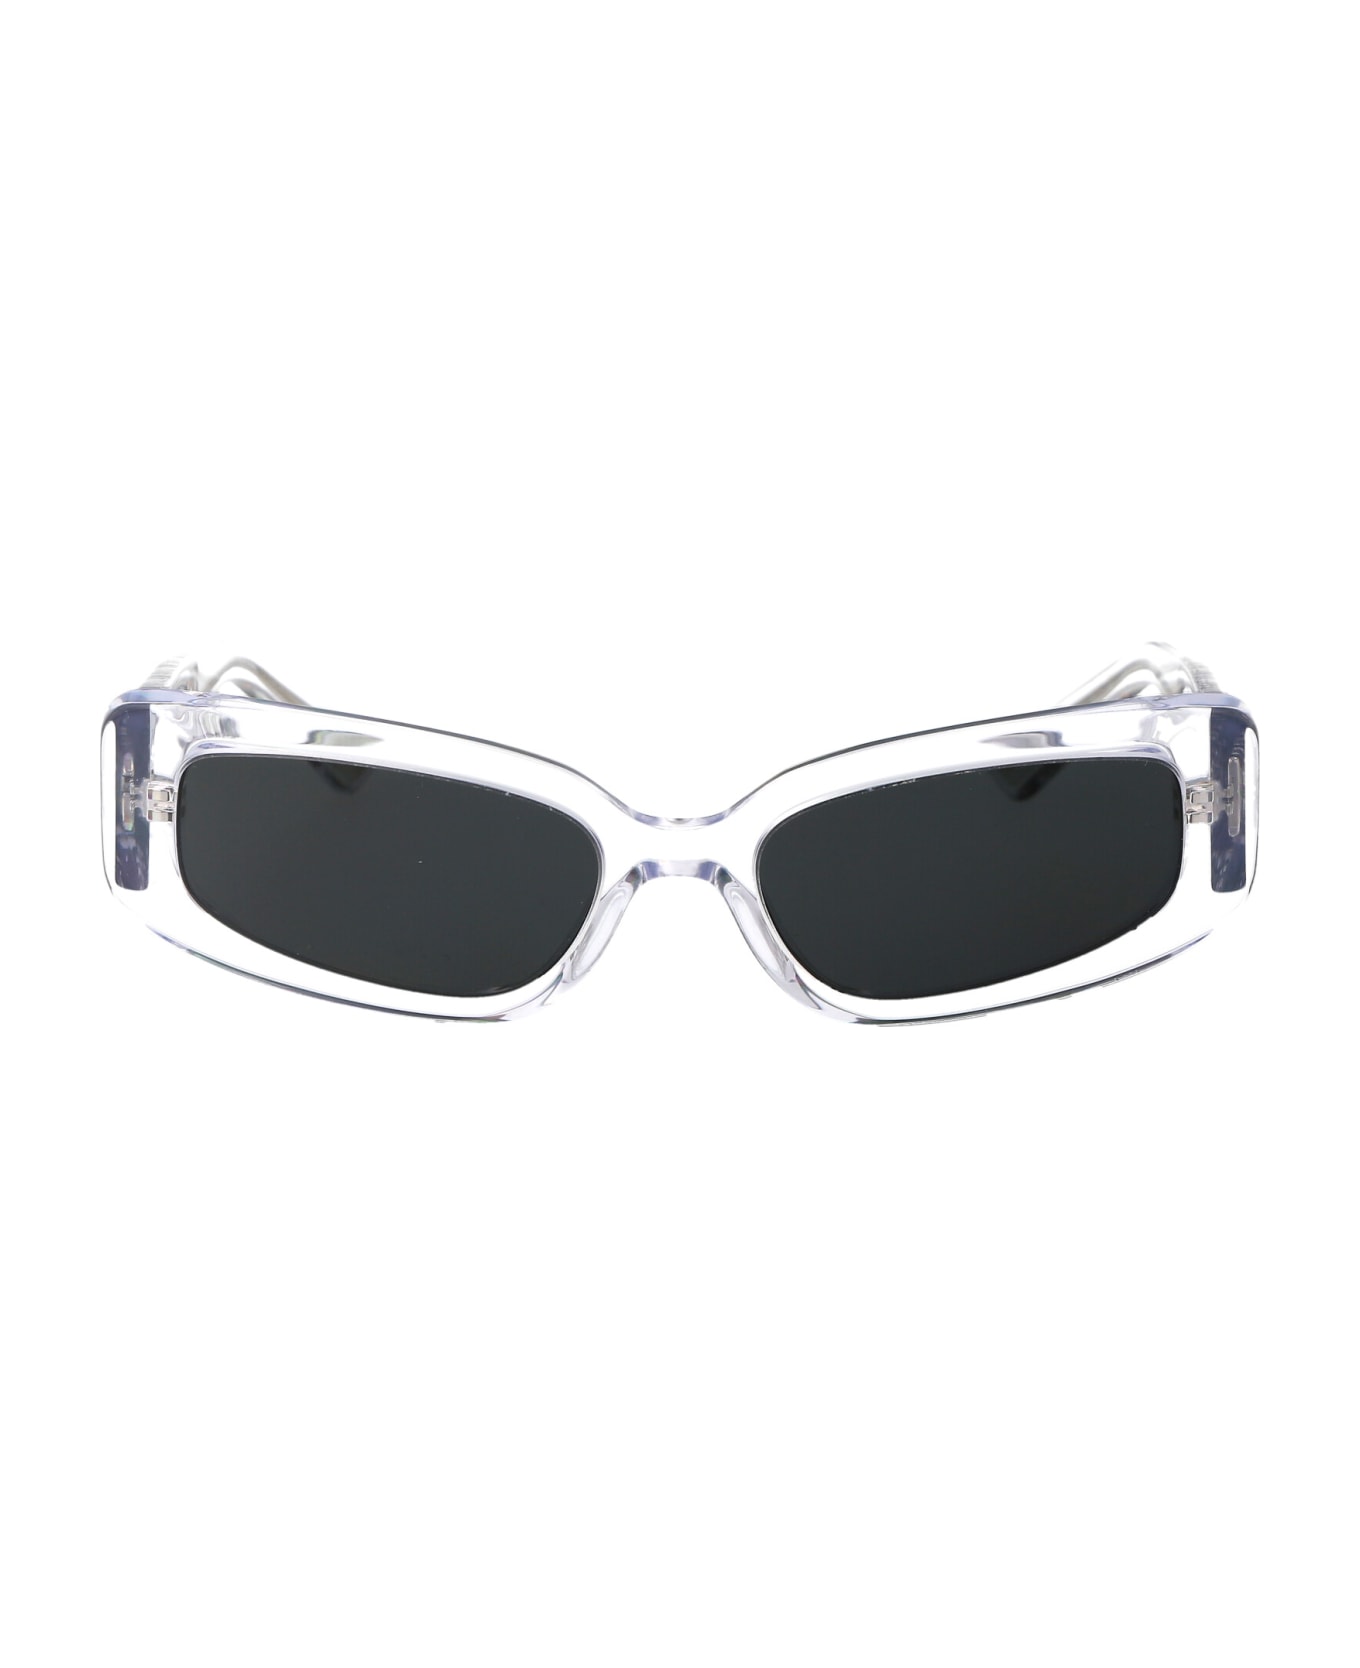 Dolce & Gabbana Eyewear 0dg4445 Sunglasses - 313387 Crystal サングラス